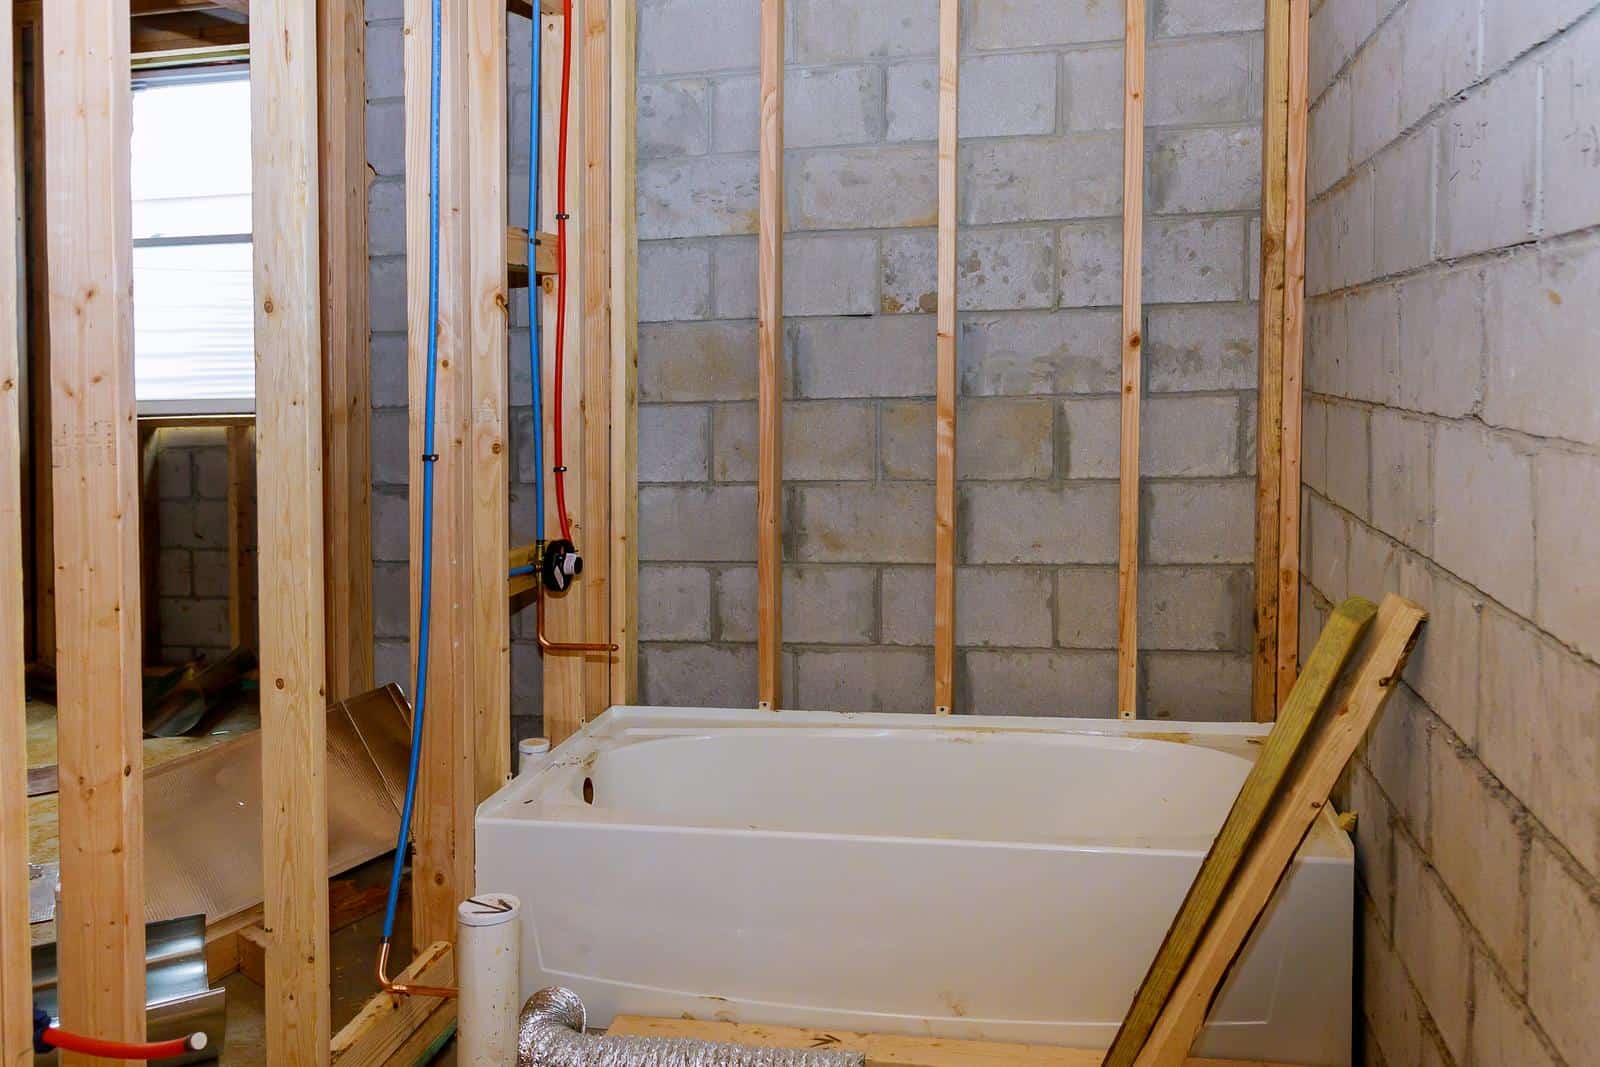 Unfinished basement bathroom